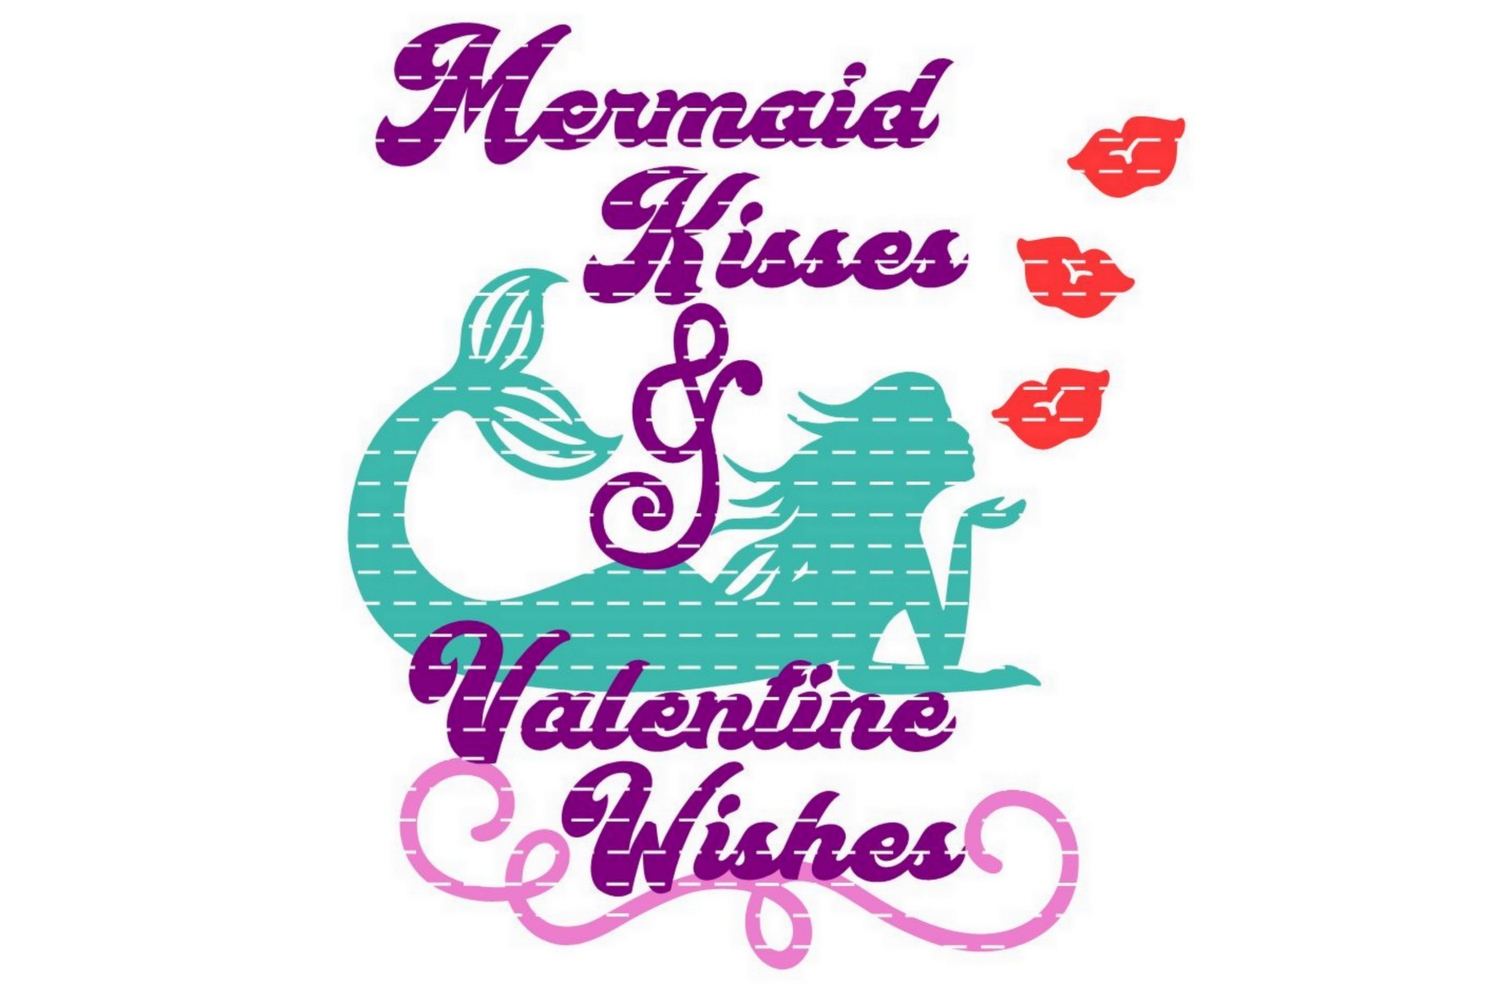 Download Mermaid Kisses Valentine Wishes #02 SVG Cut File